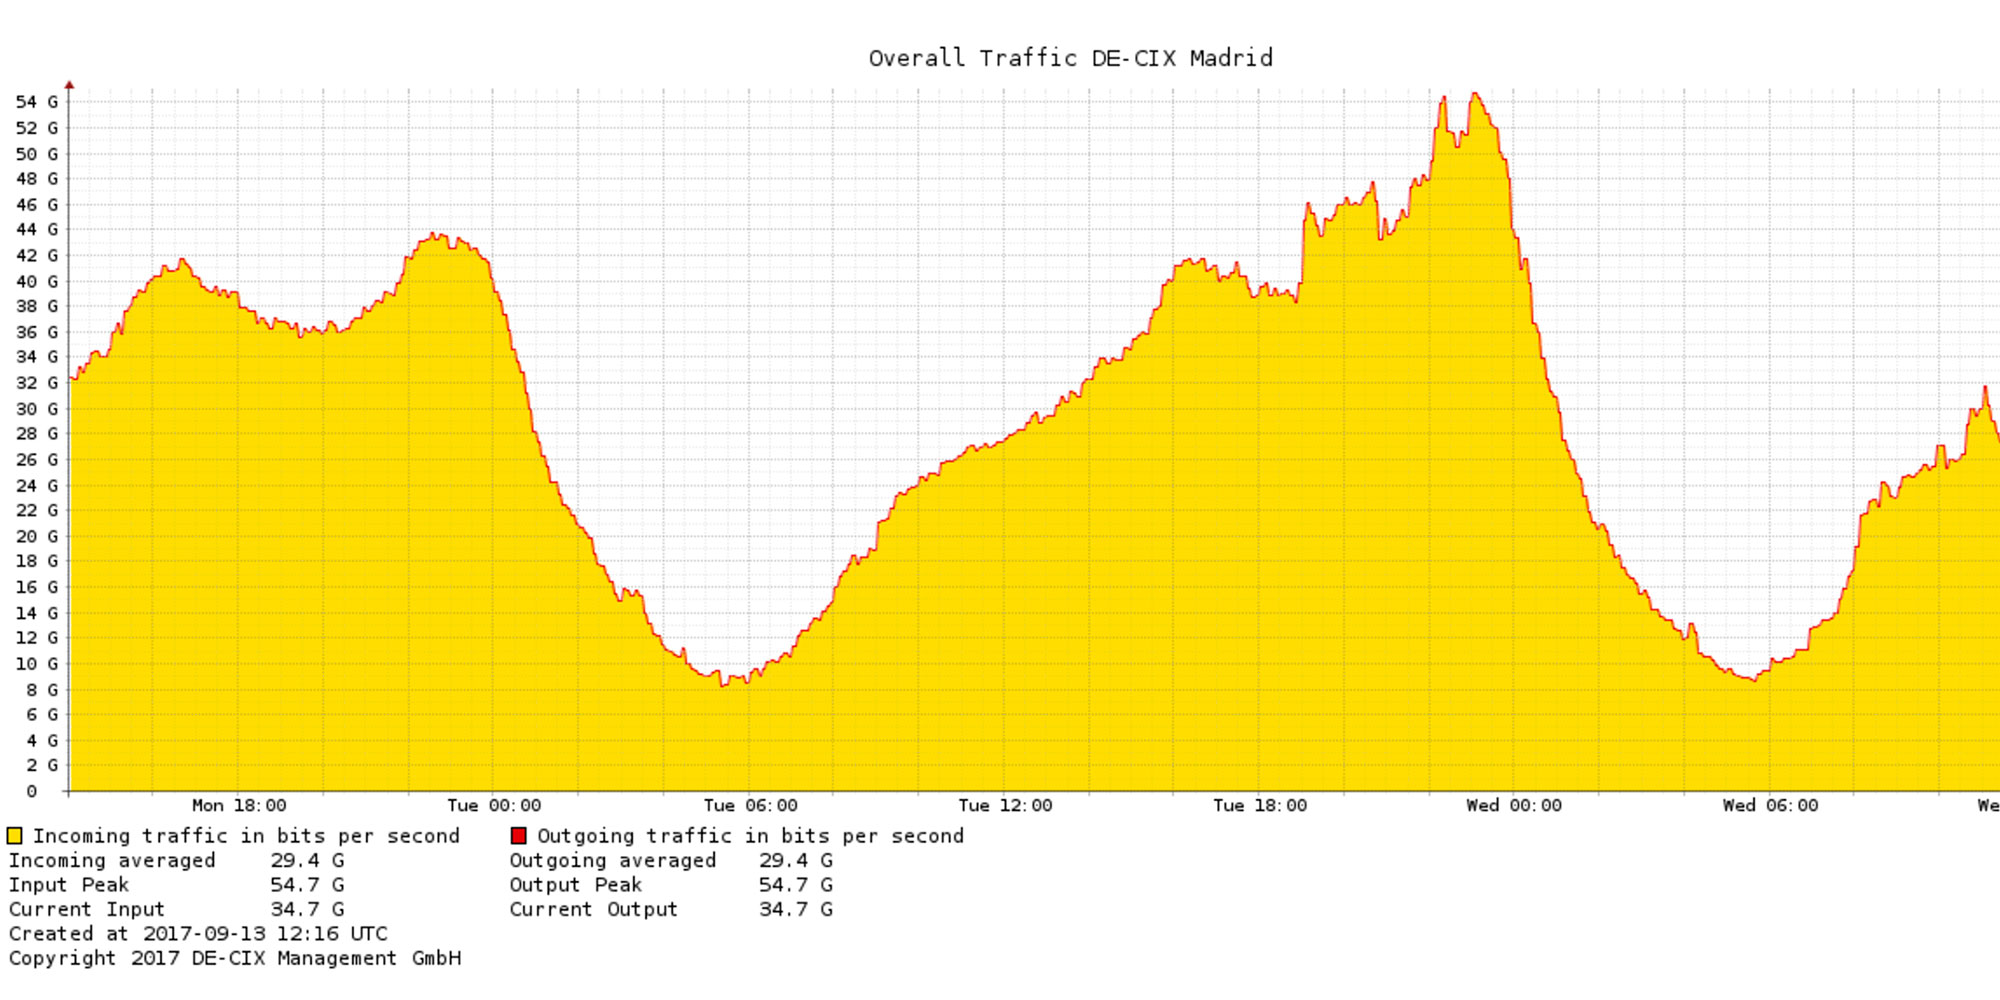 A ltima hora del da 12 de septiembre, DE-CIX experiment un pico de trfico de 54,7GB por segundo